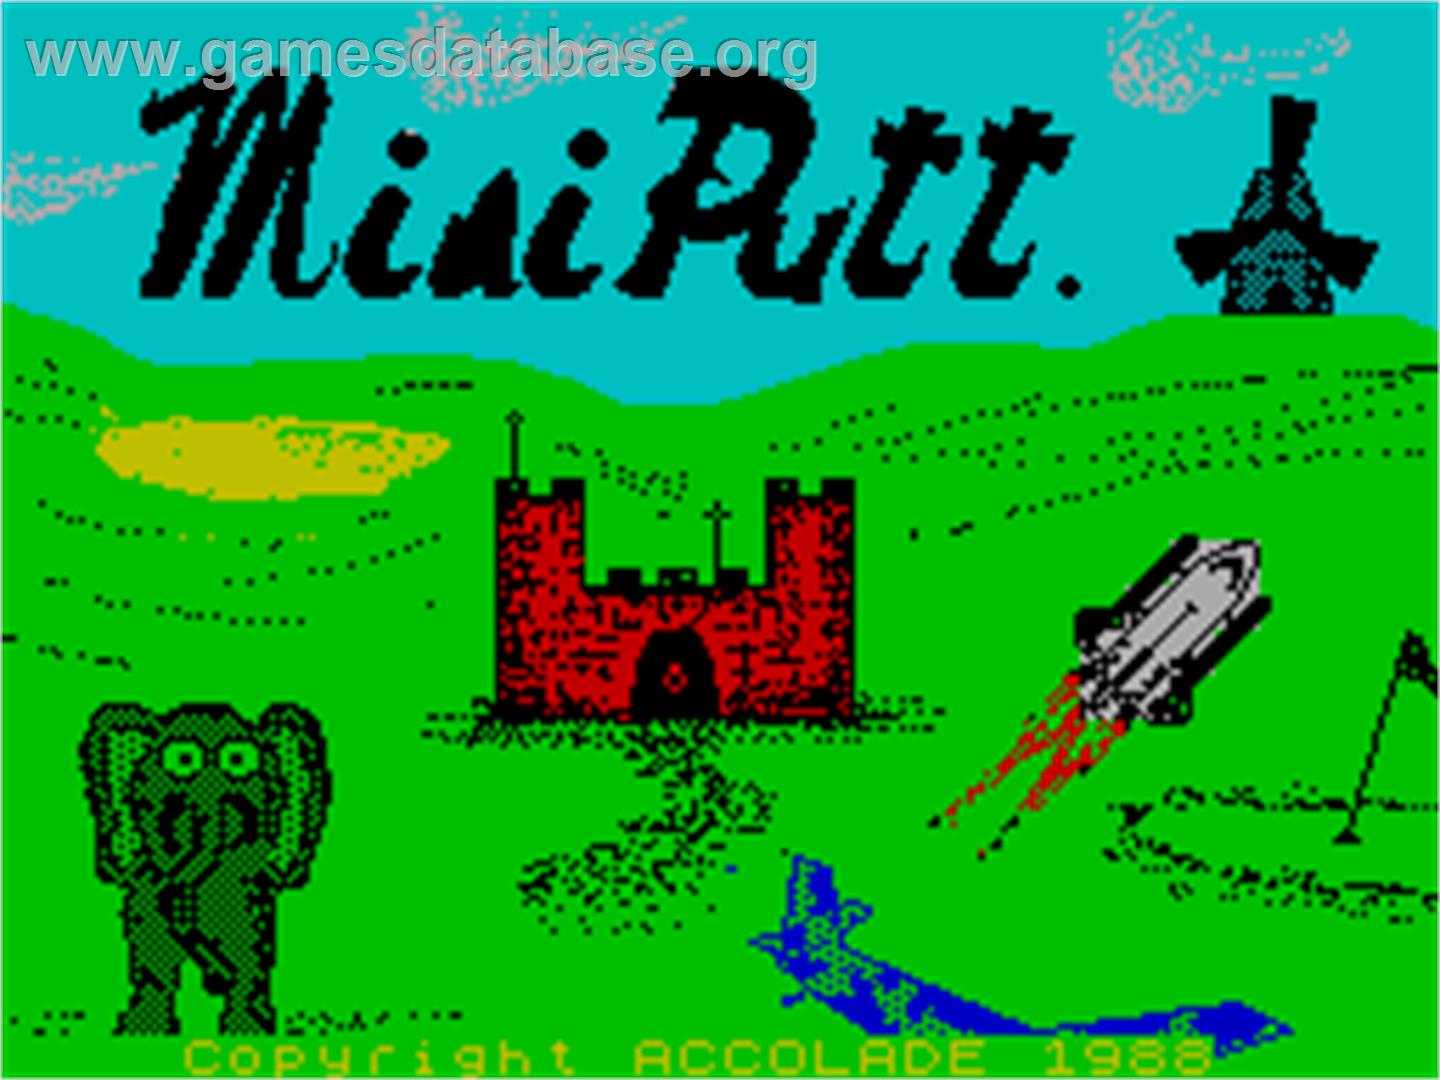 Mini-Putt - Sinclair ZX Spectrum - Artwork - Title Screen